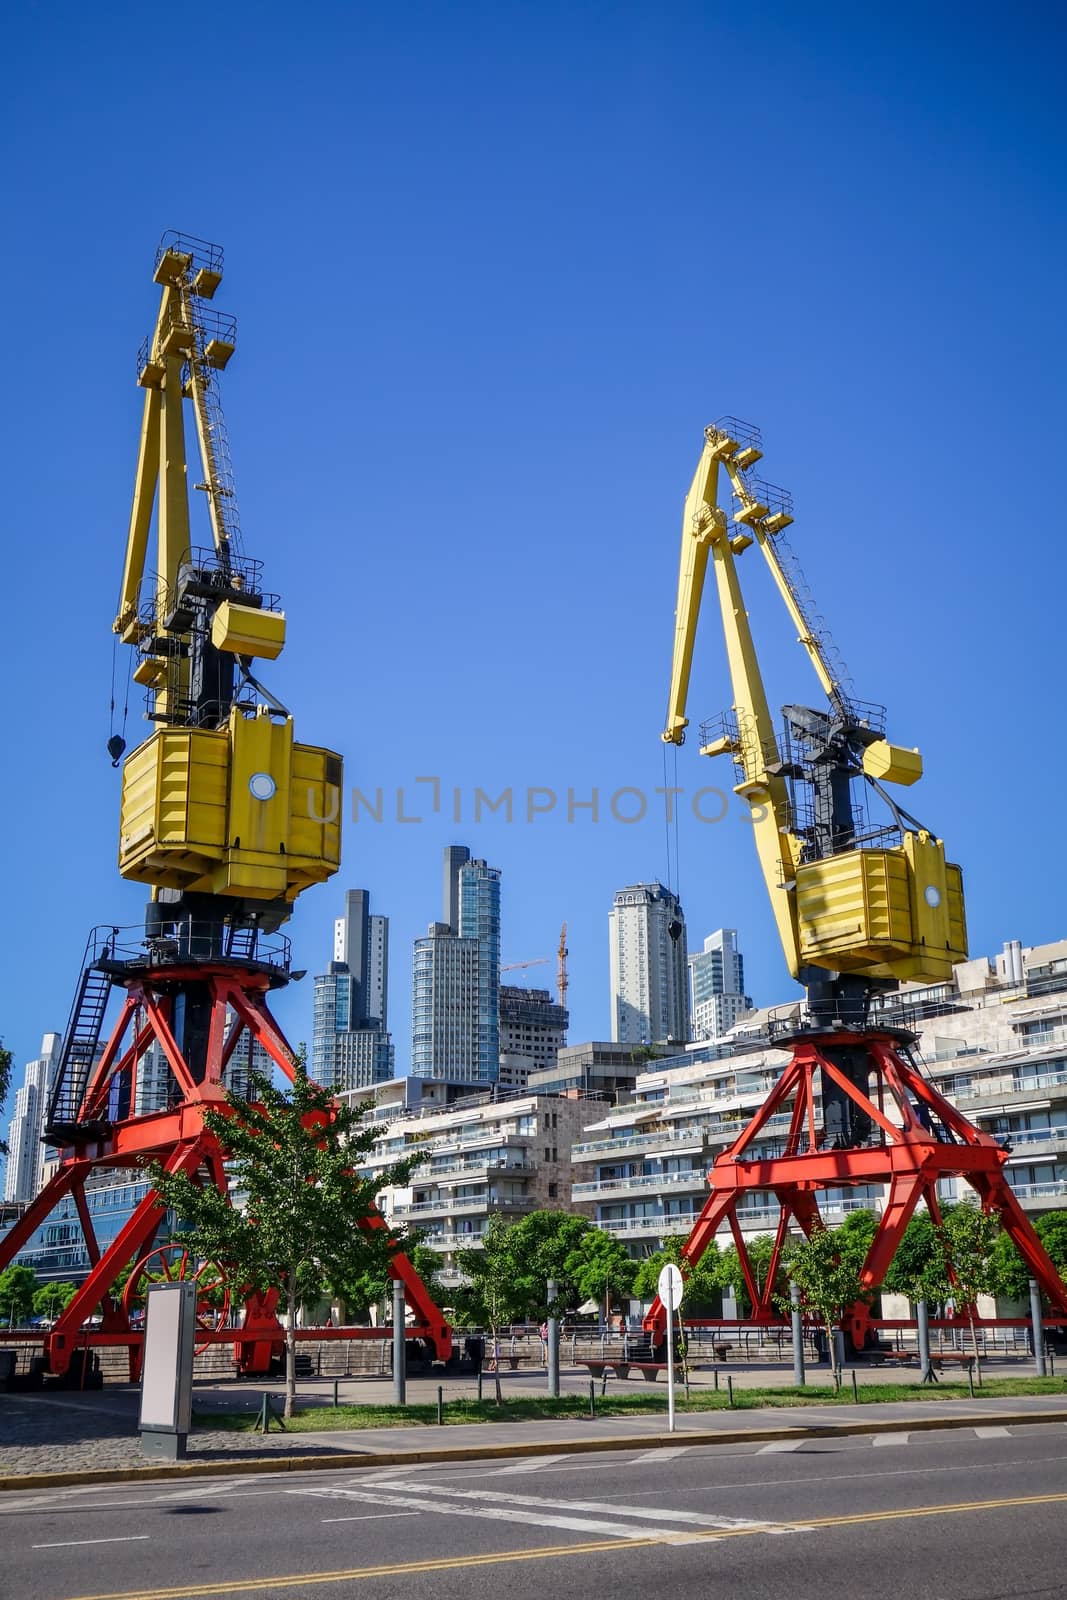 Construction crane in Puerto Madero, Buenos Aires, Argentina